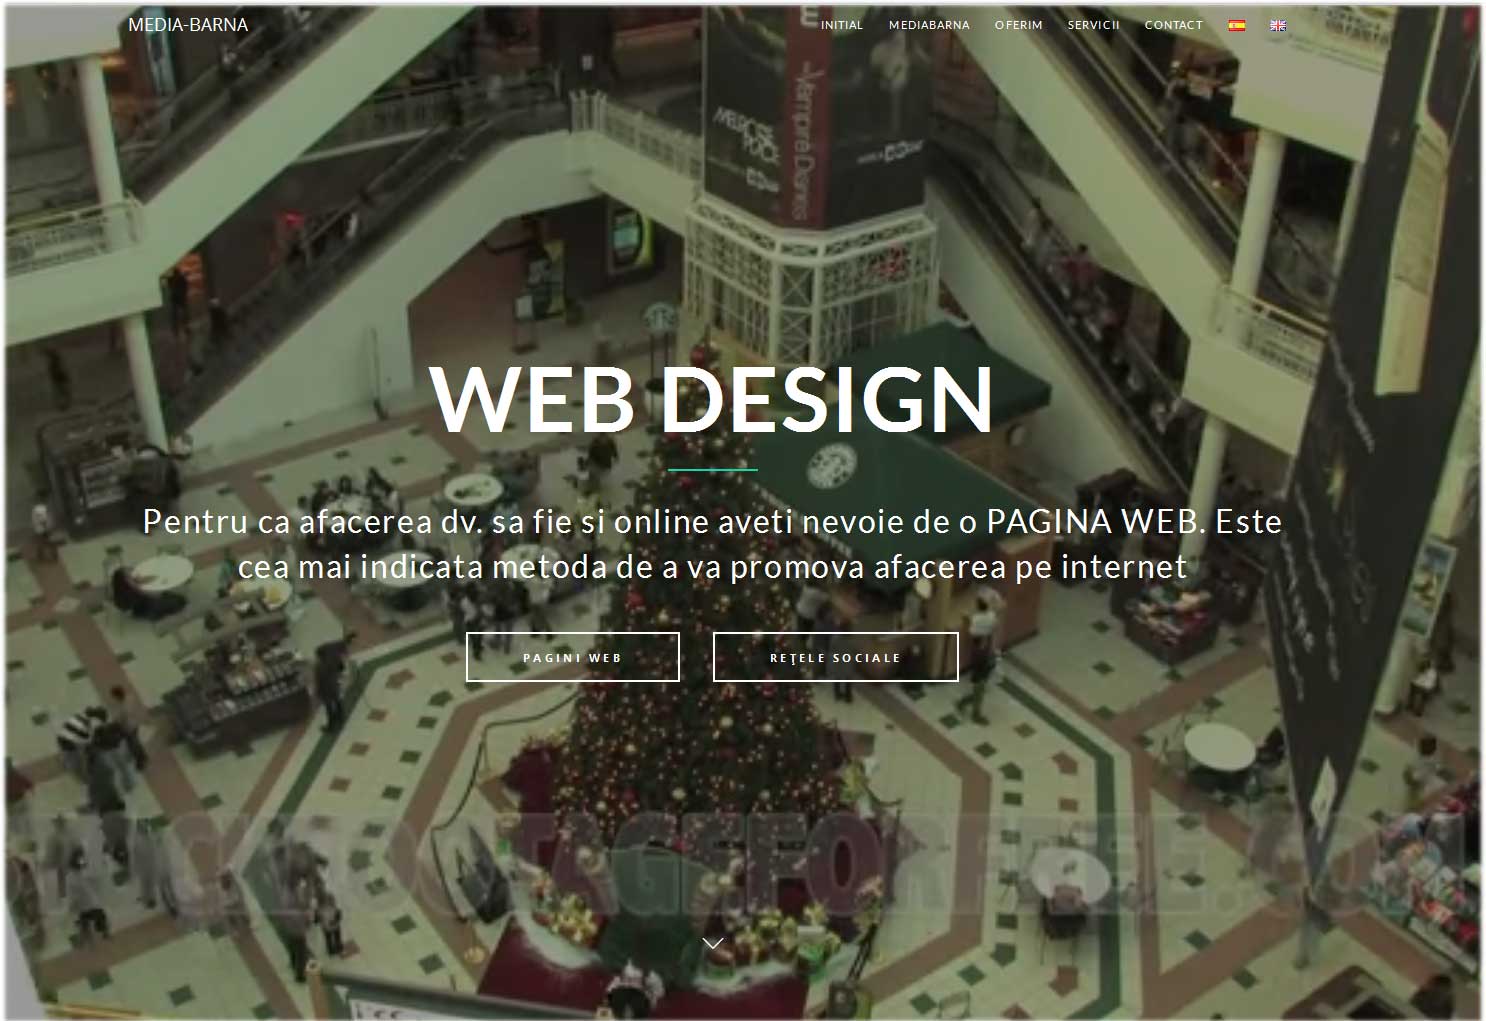 MediaBarna Web Design Barcelona